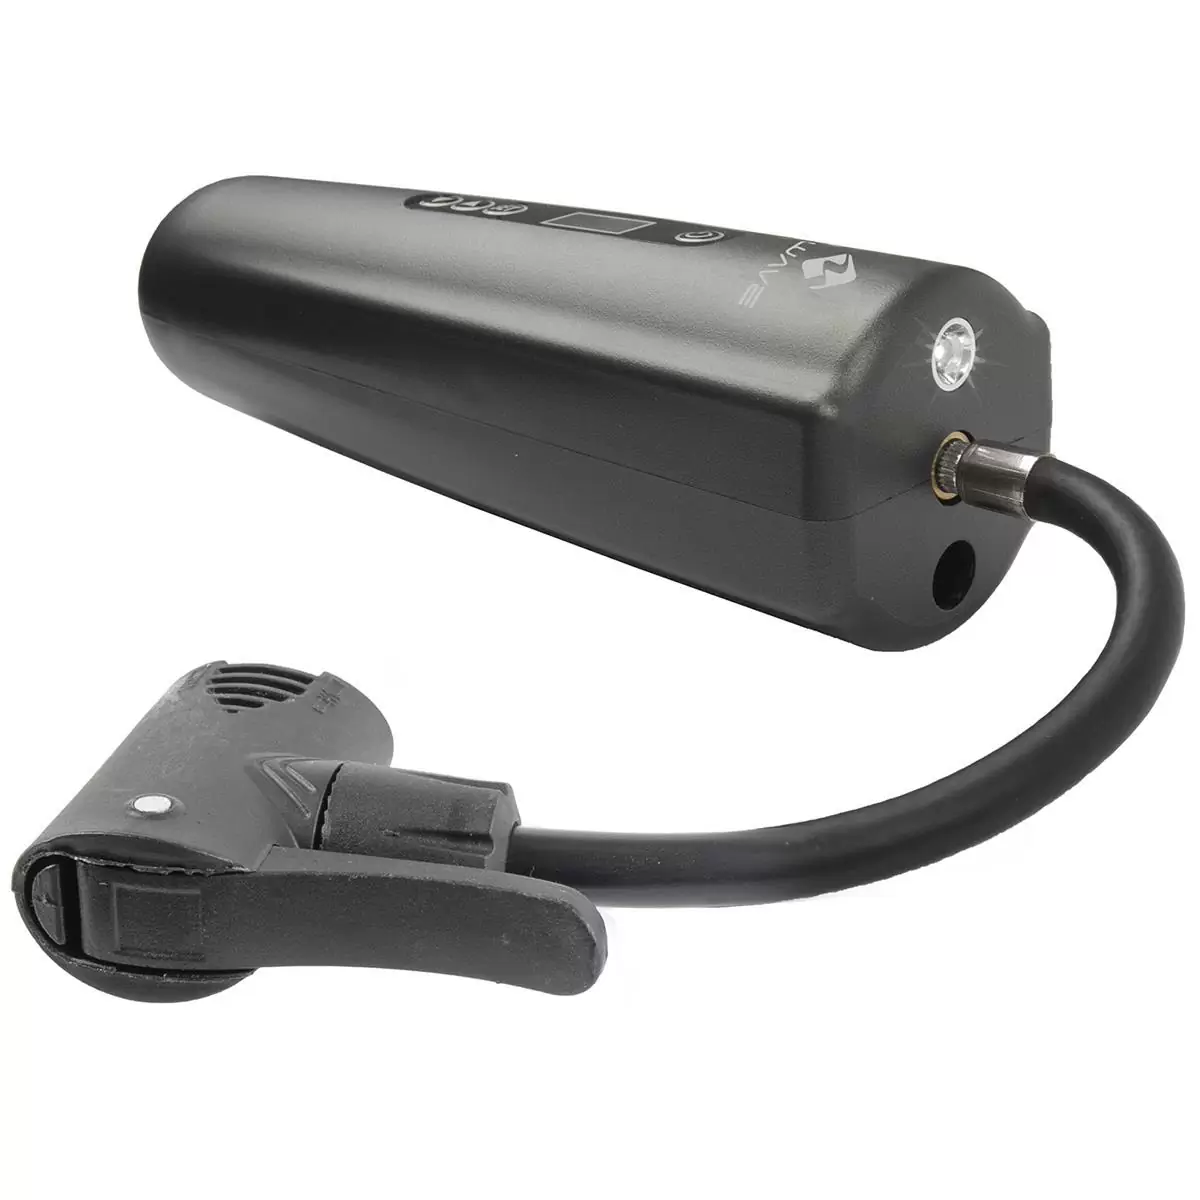 Pompa elettrica a Batteria Elumatik USB2 #1